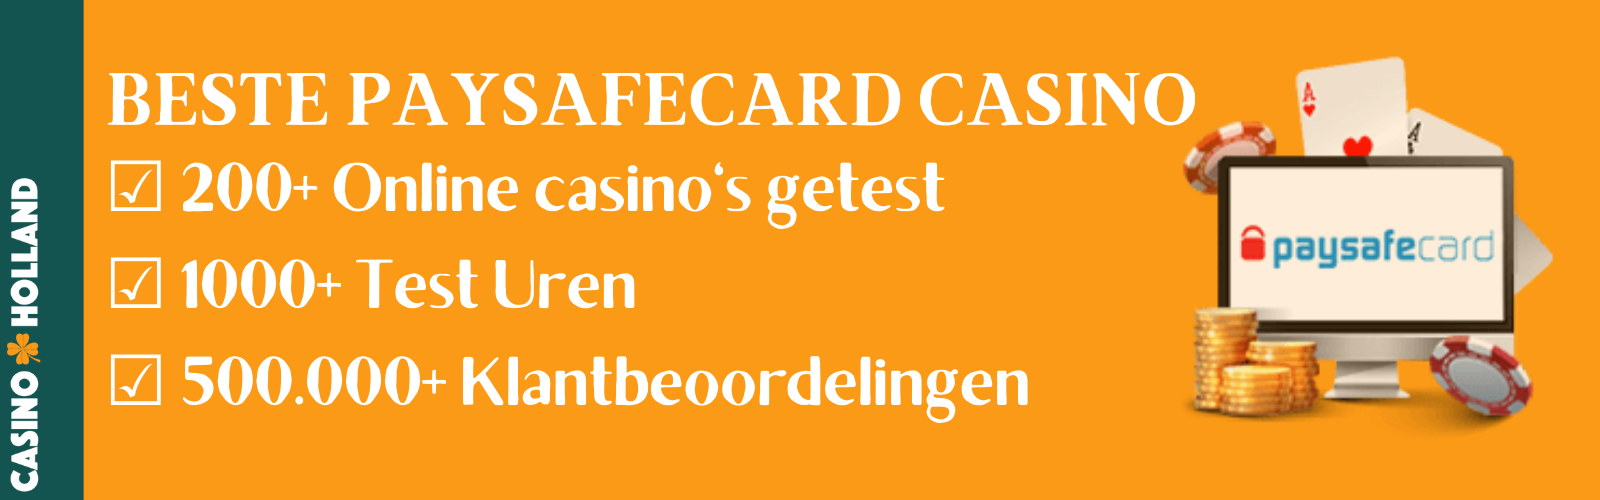 Paysafecard Casino